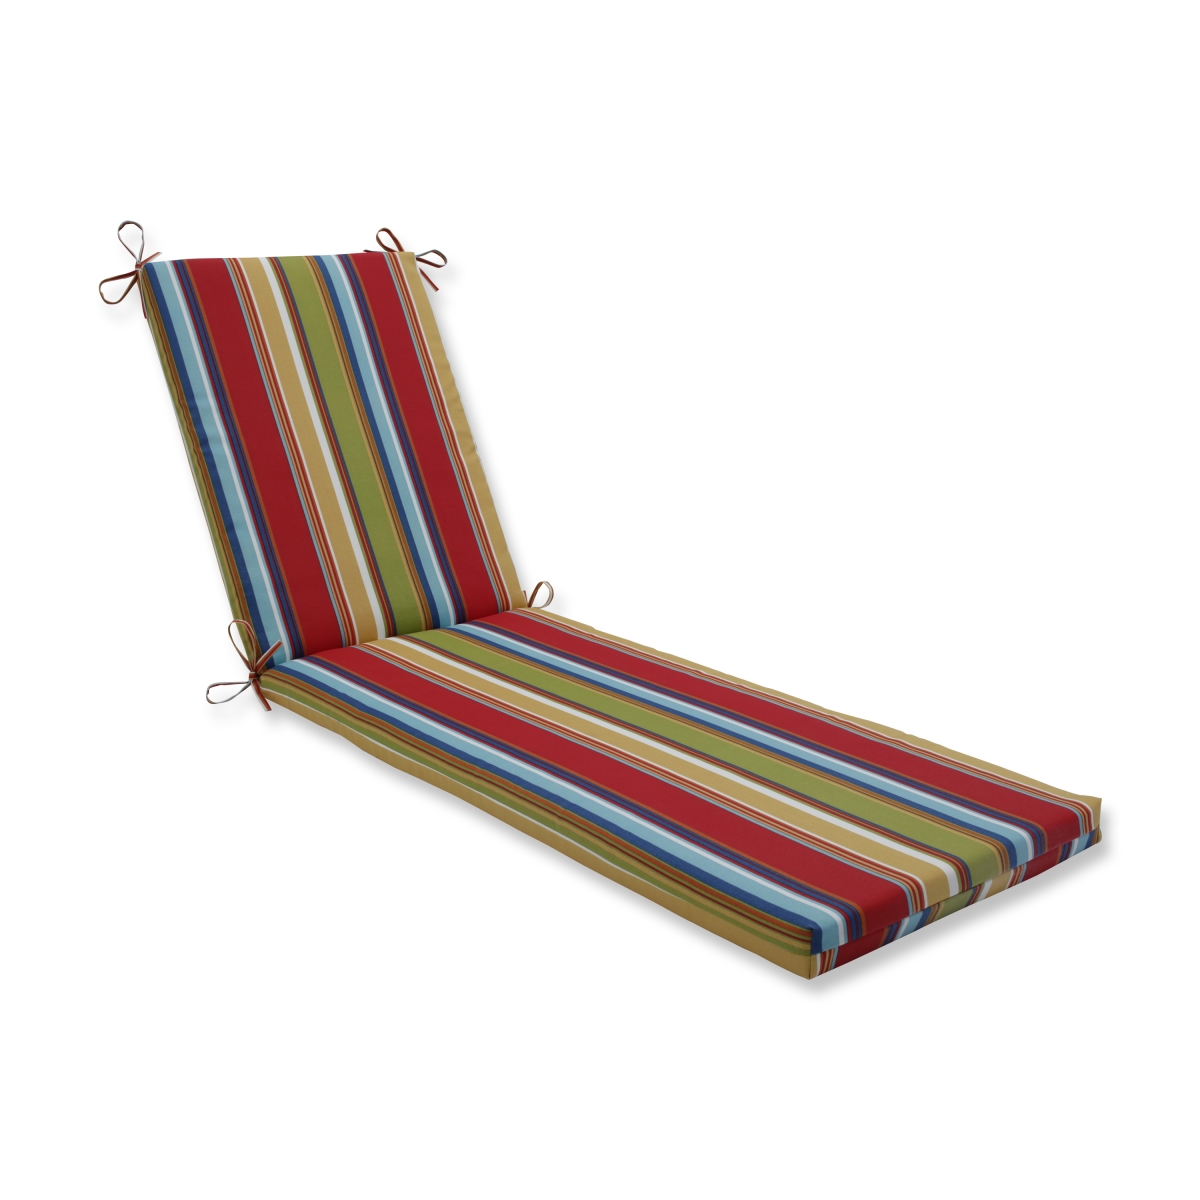 80 X 23 X 3 In. Outdoor & Indoor Westport Garden Chaise Lounge Cushion, Multicolored